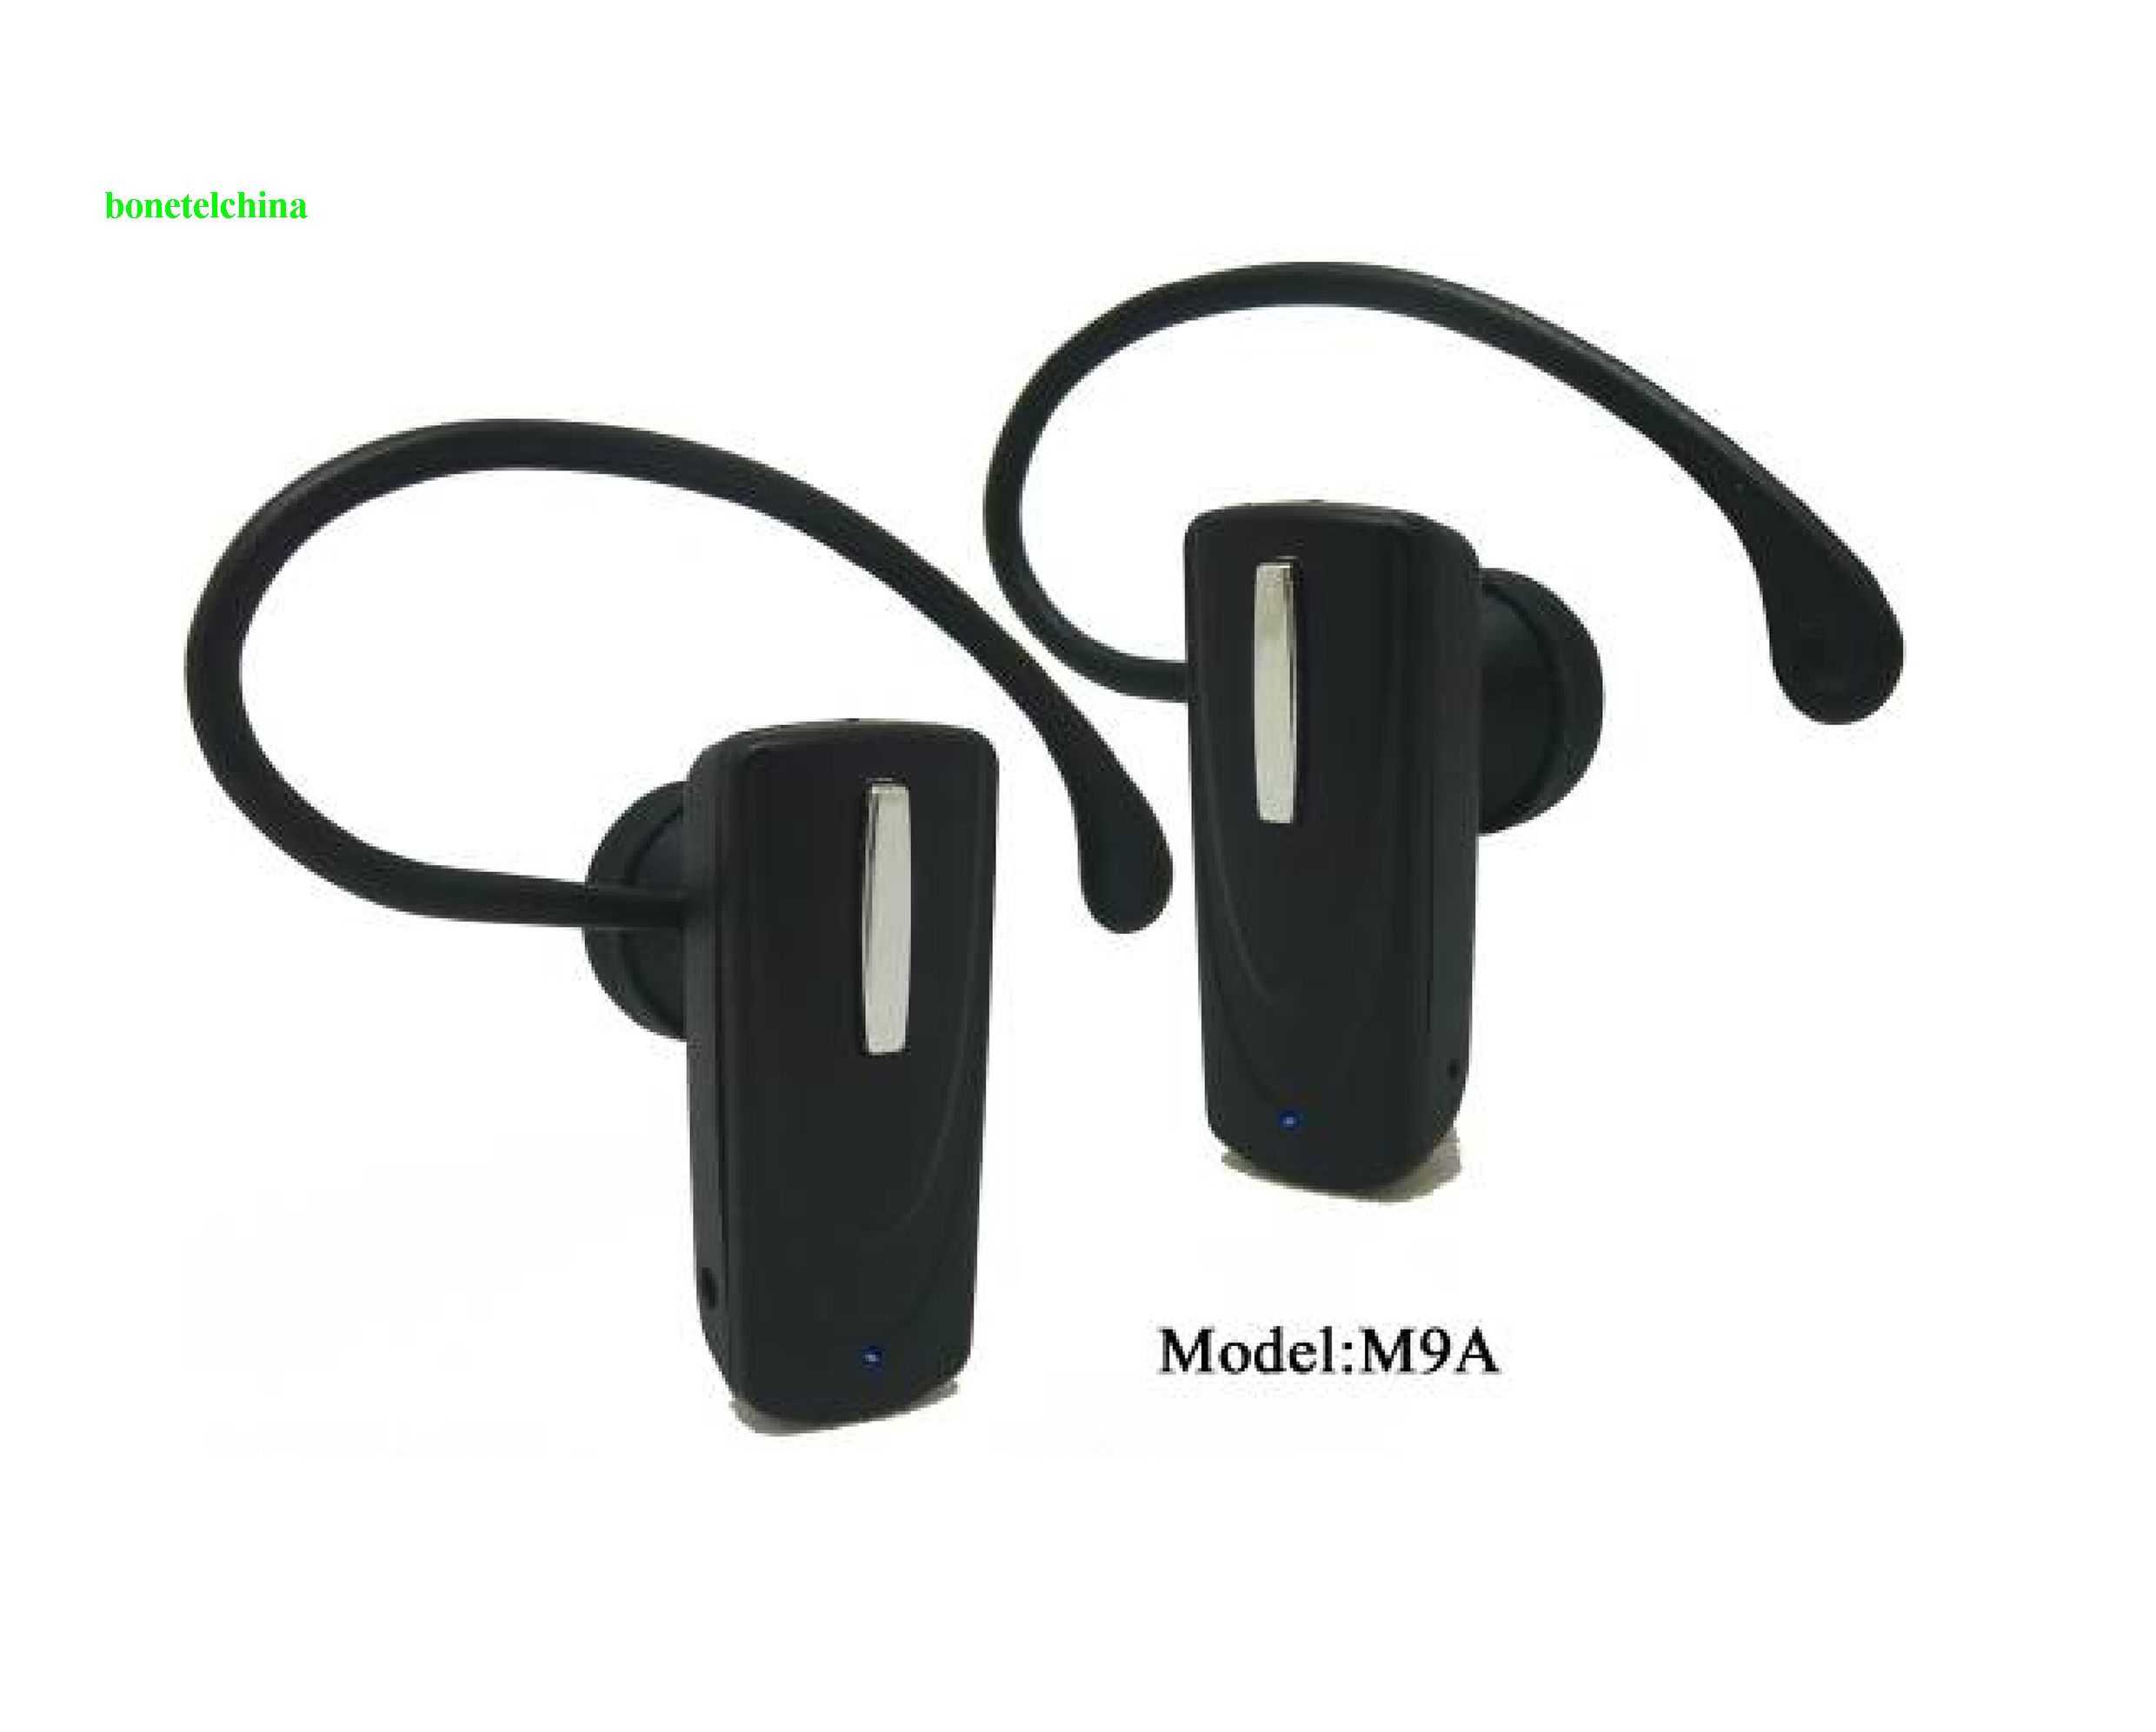 Bluethooth headset M9A